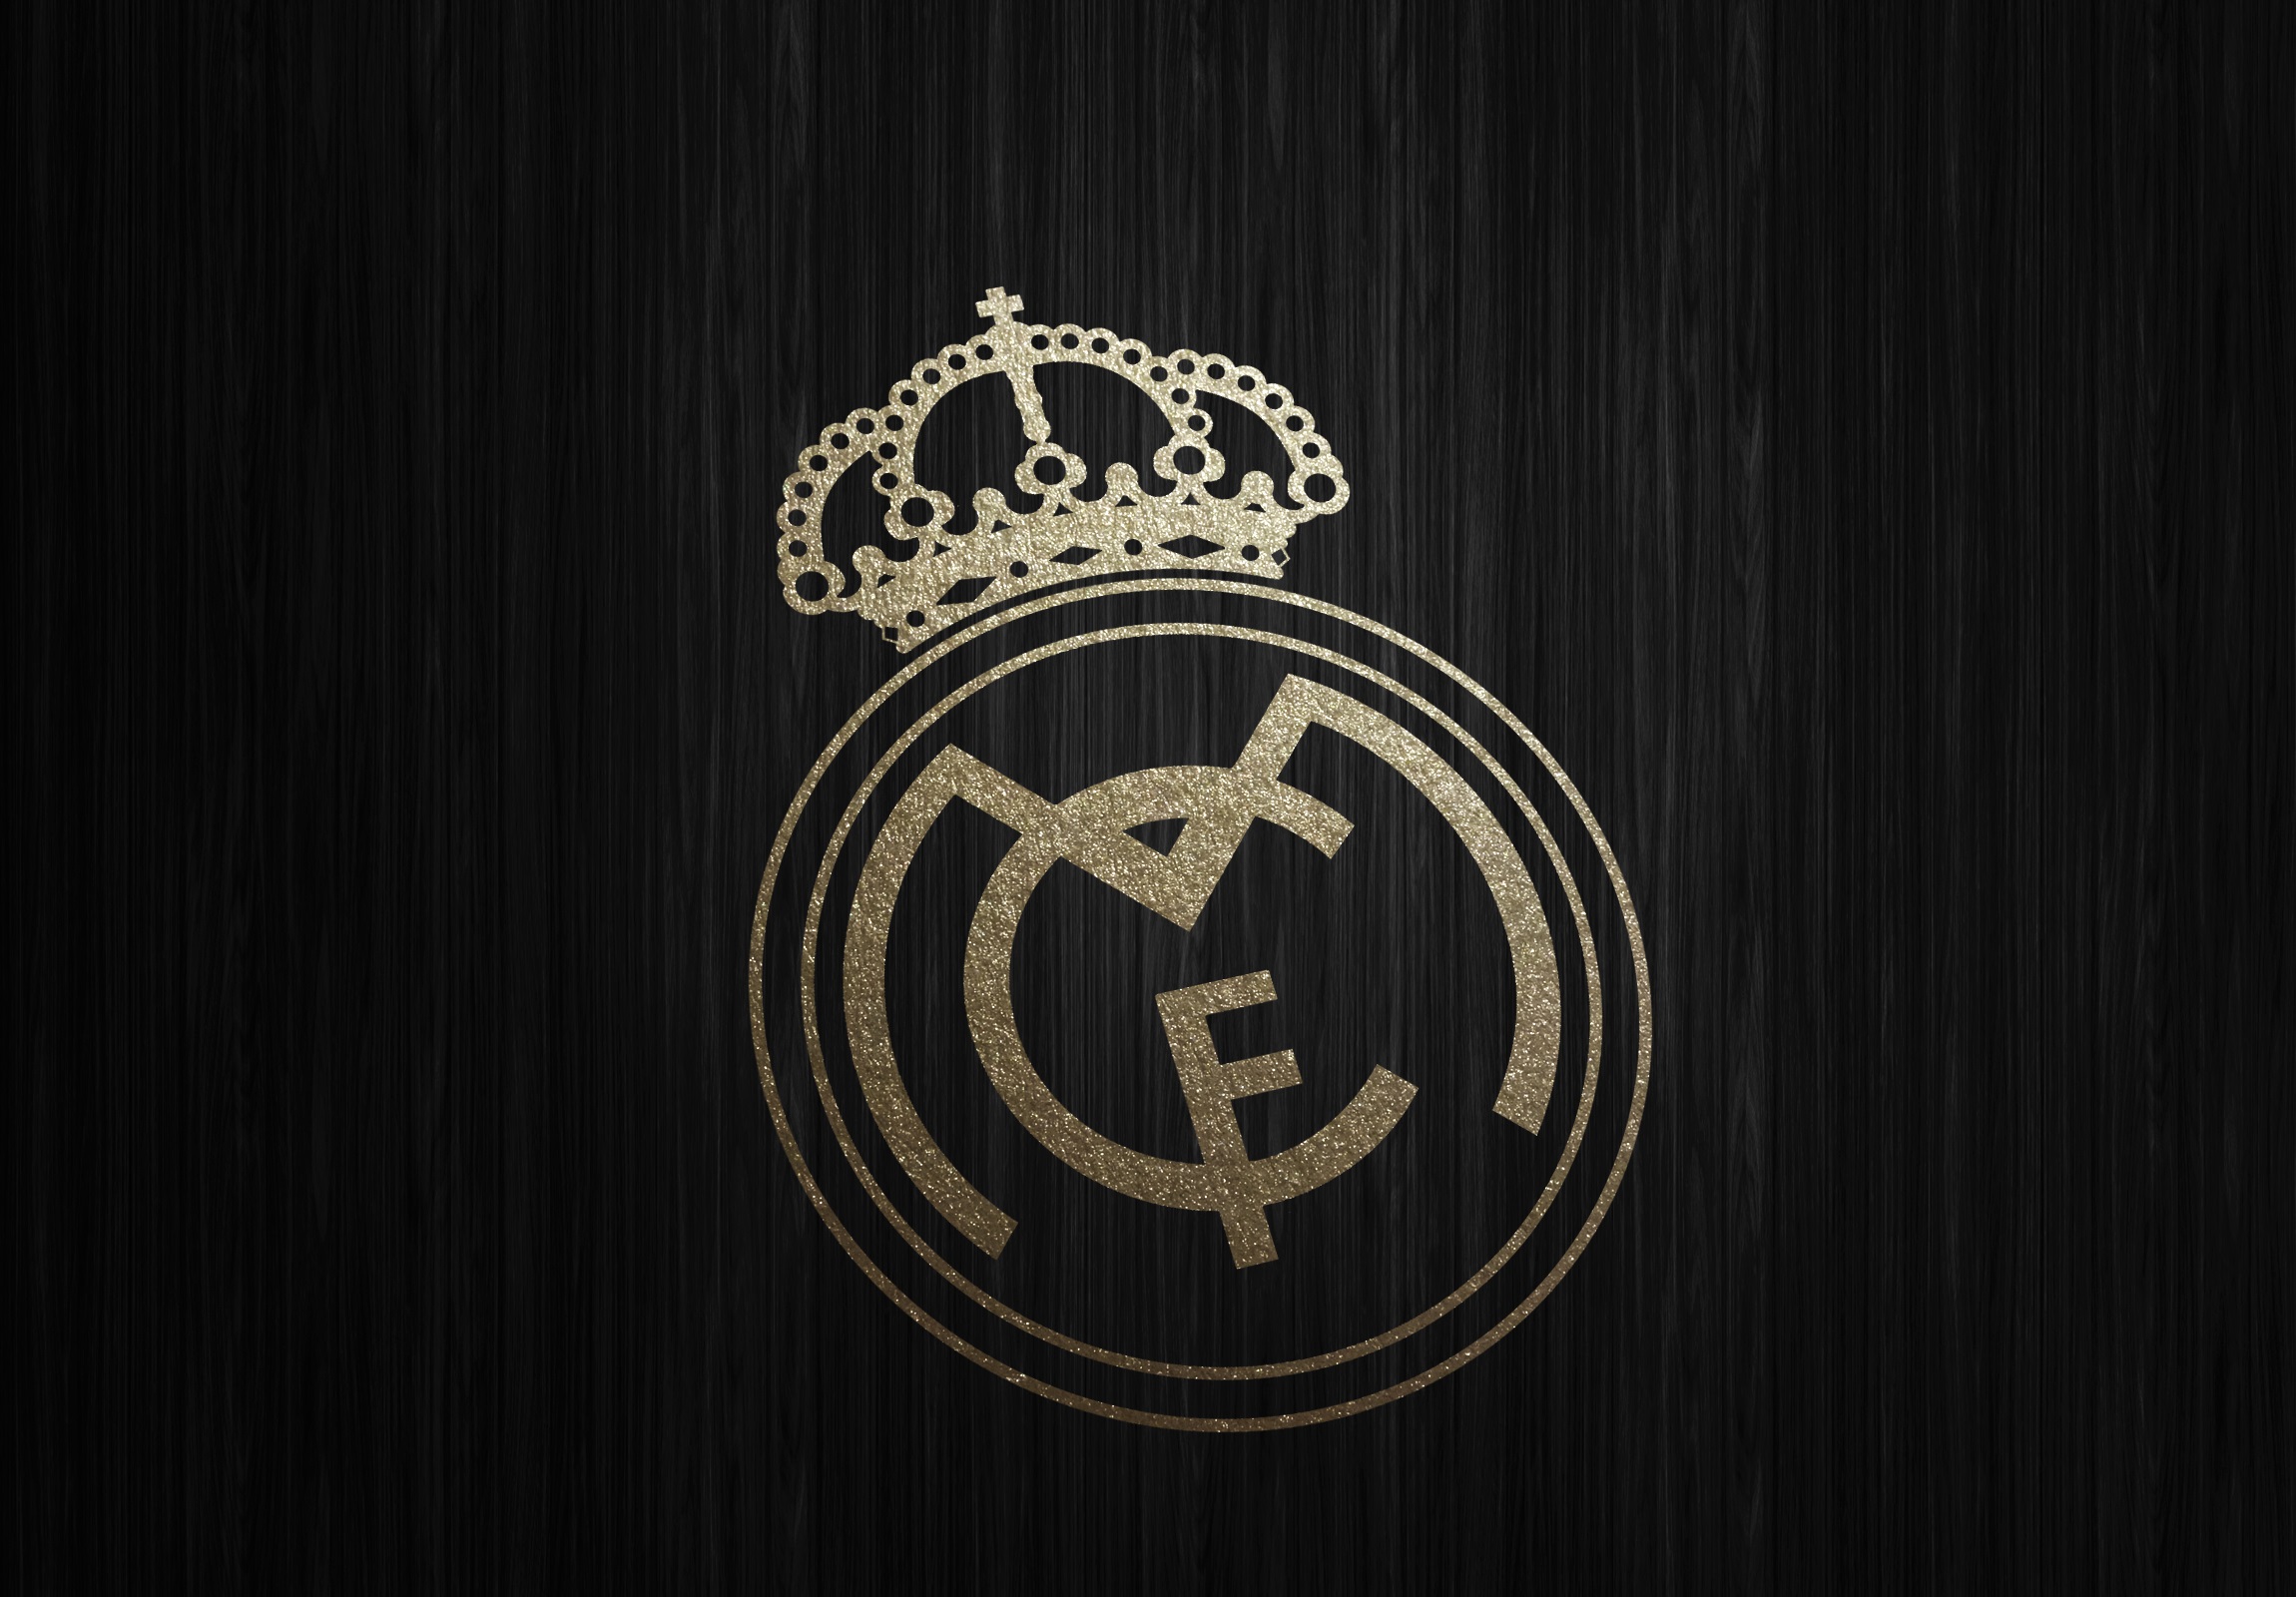 Real Madrid Wallpaper Sf